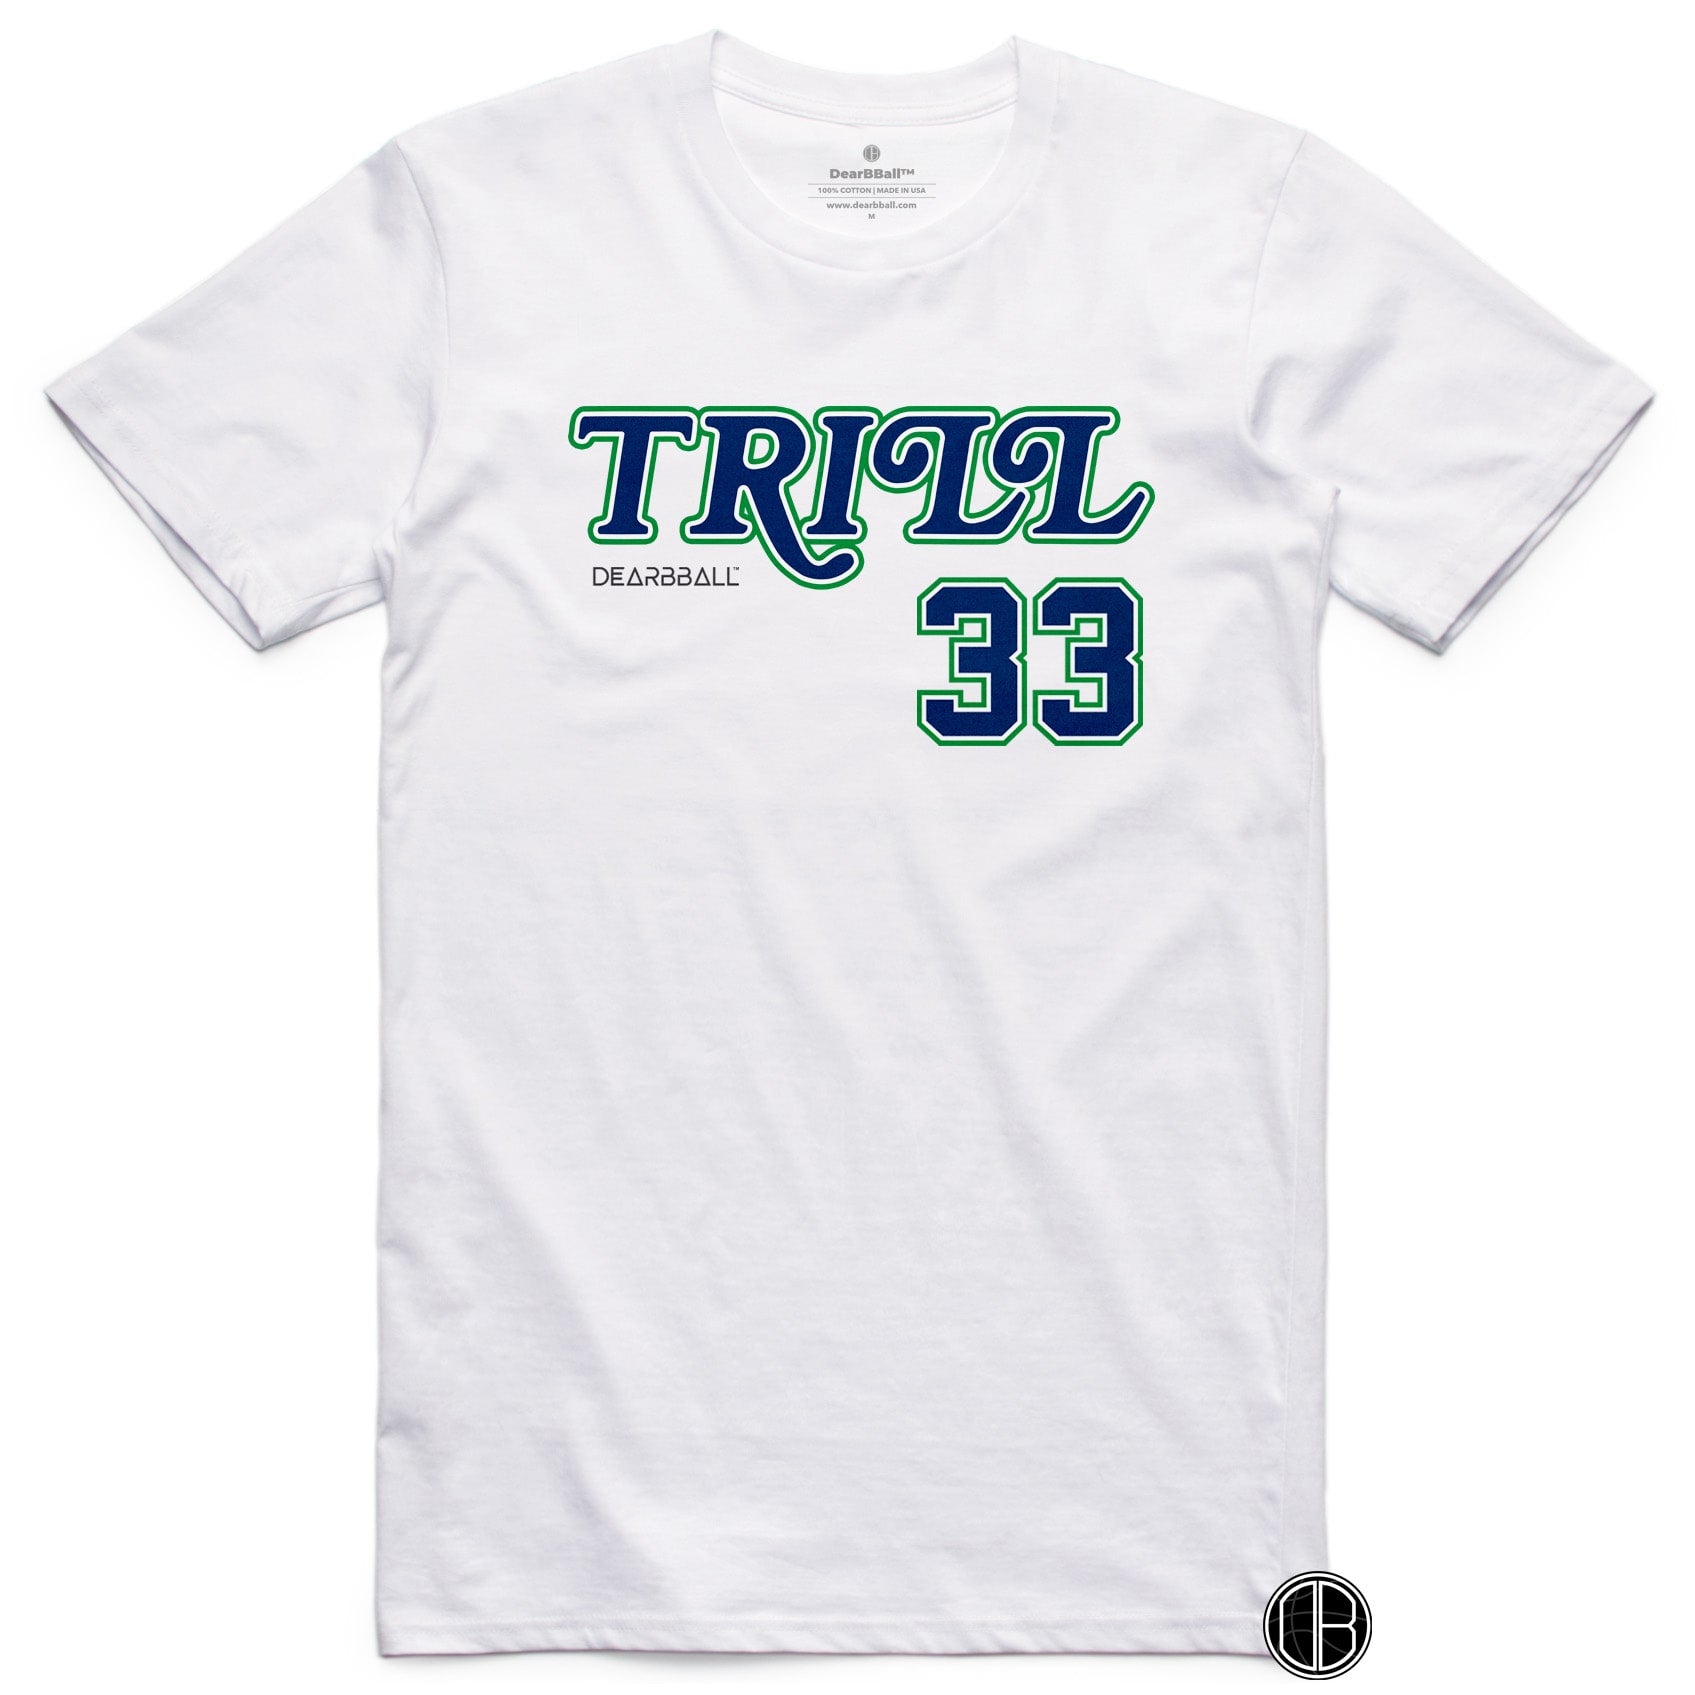 Willie Cauley Stein T-Shirt - Trill 33 Mavs Style Dallas Mavericks Basketball Dearbball white